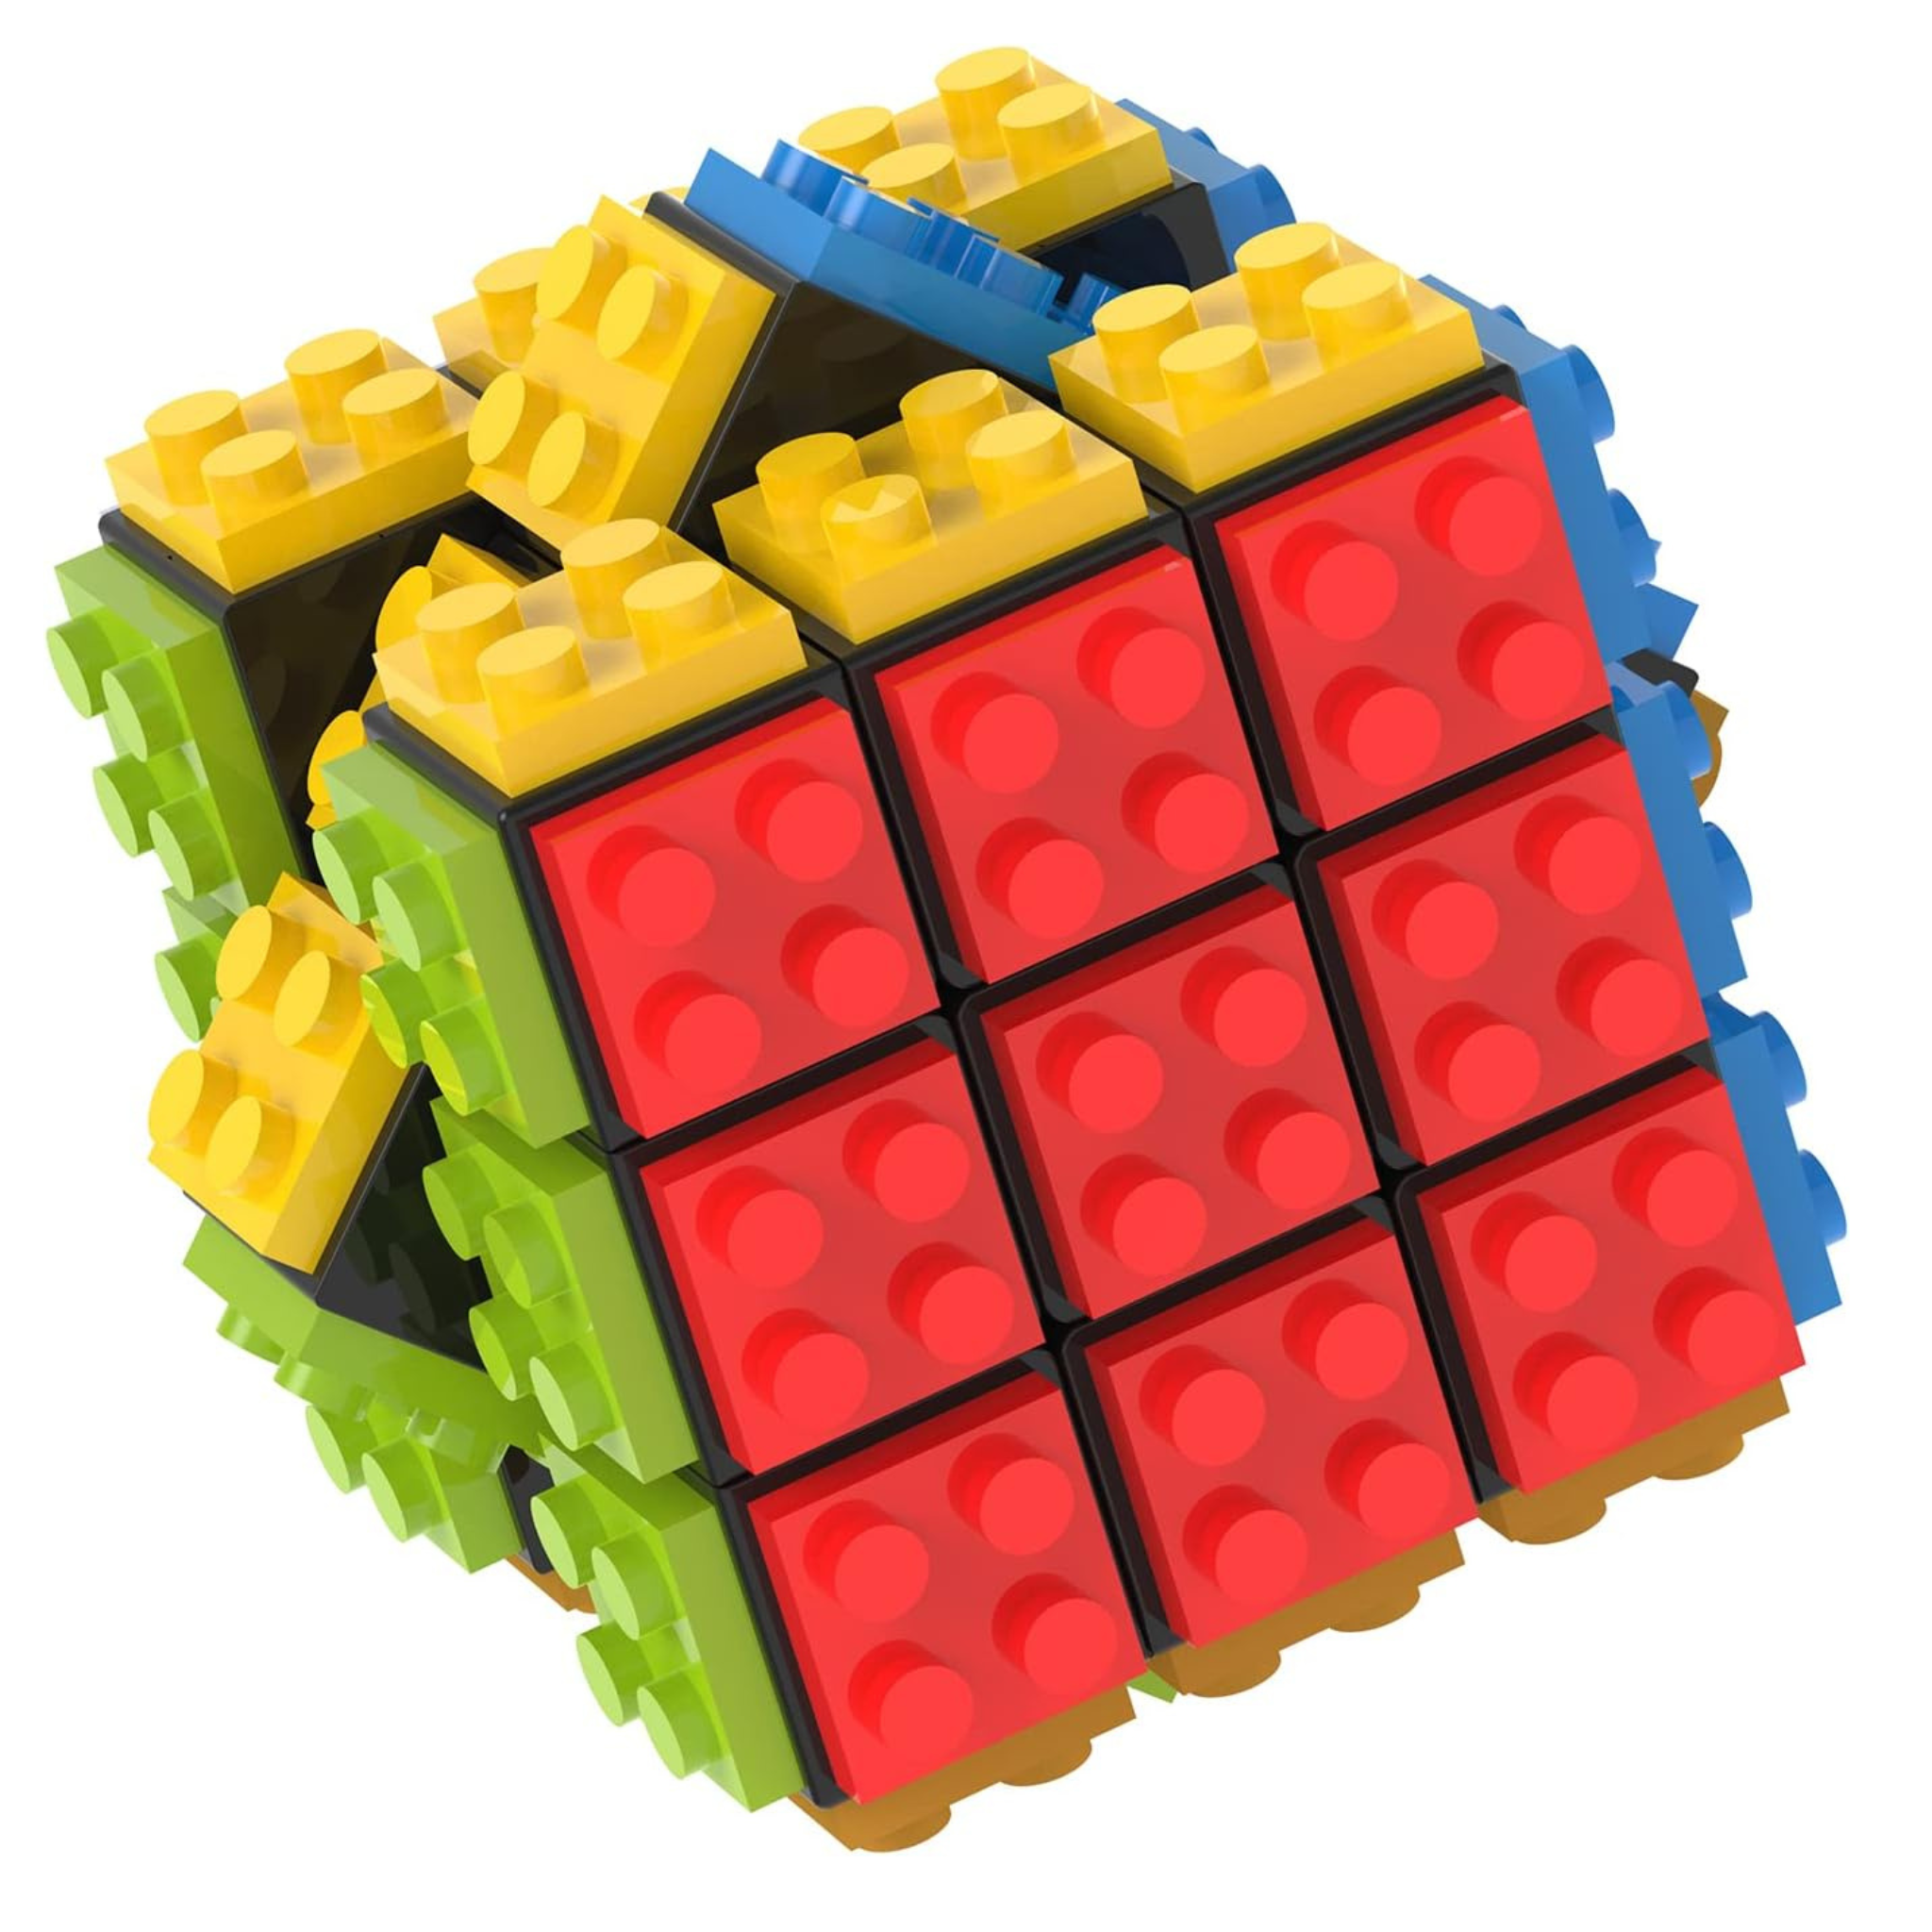 3x3 Building Brick Blocks Cube